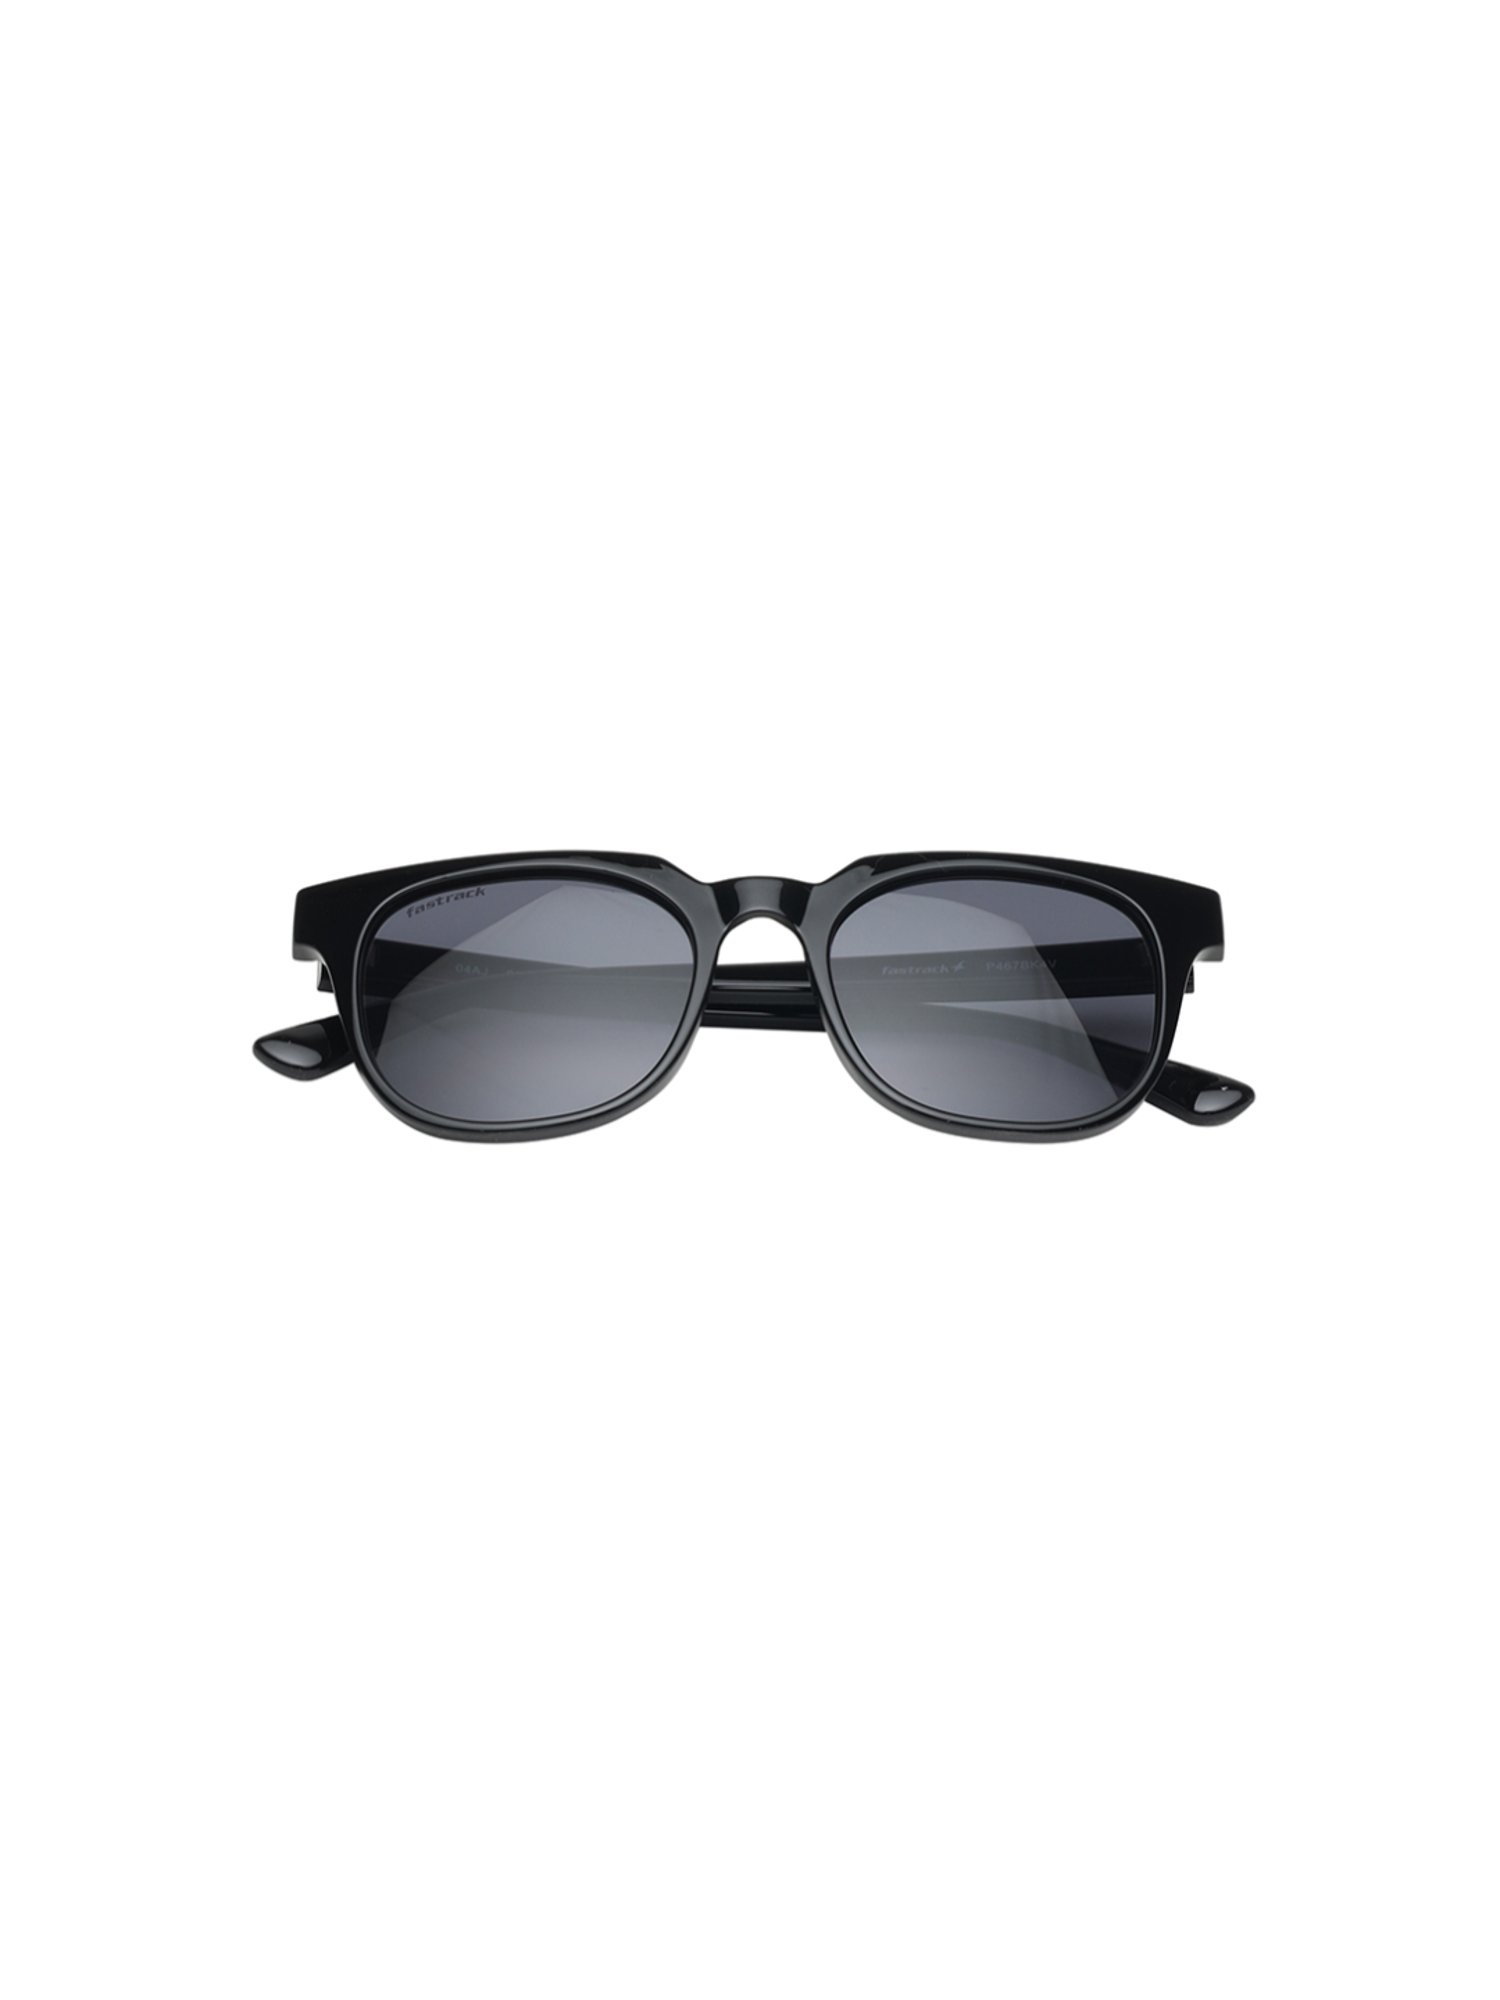 Velo Sunglasses - Virtual Try On | Sunski – Sunski